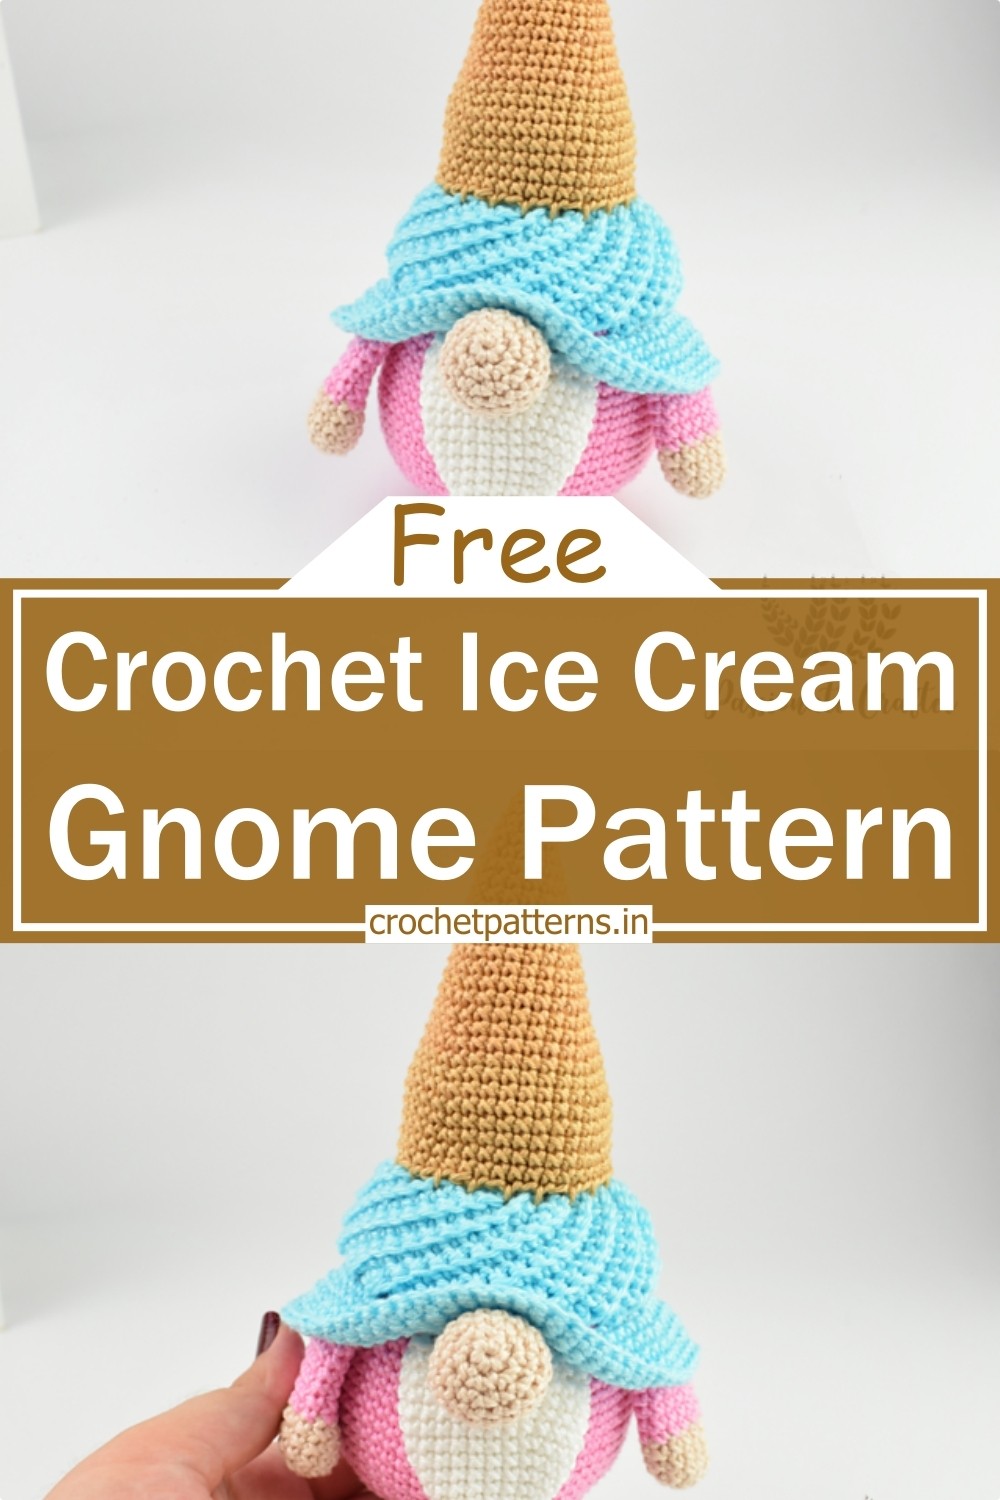 Crochet Ice Cream Gnome Pattern